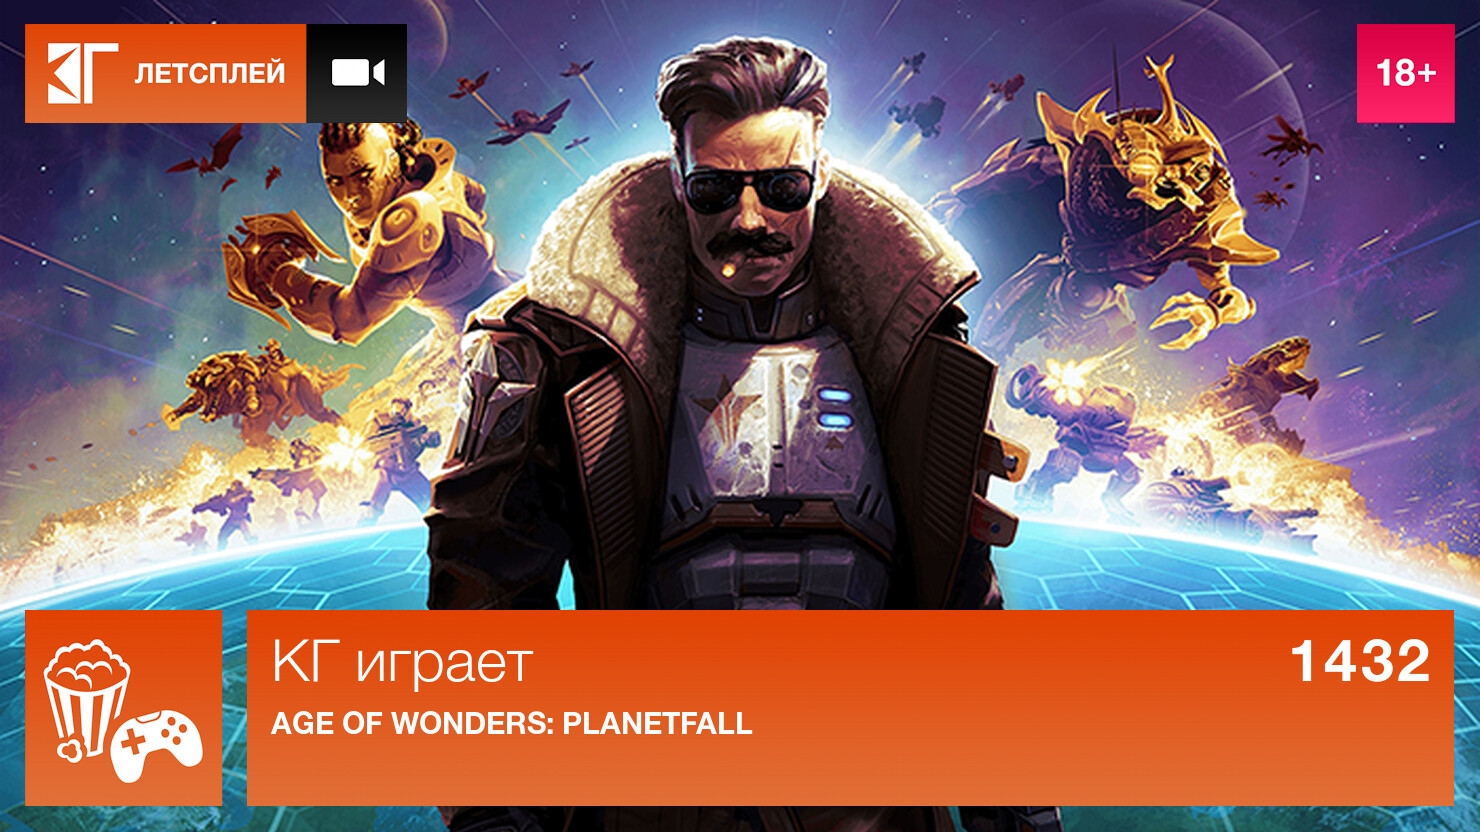 КГ играет: Age of Wonders: Planetfall